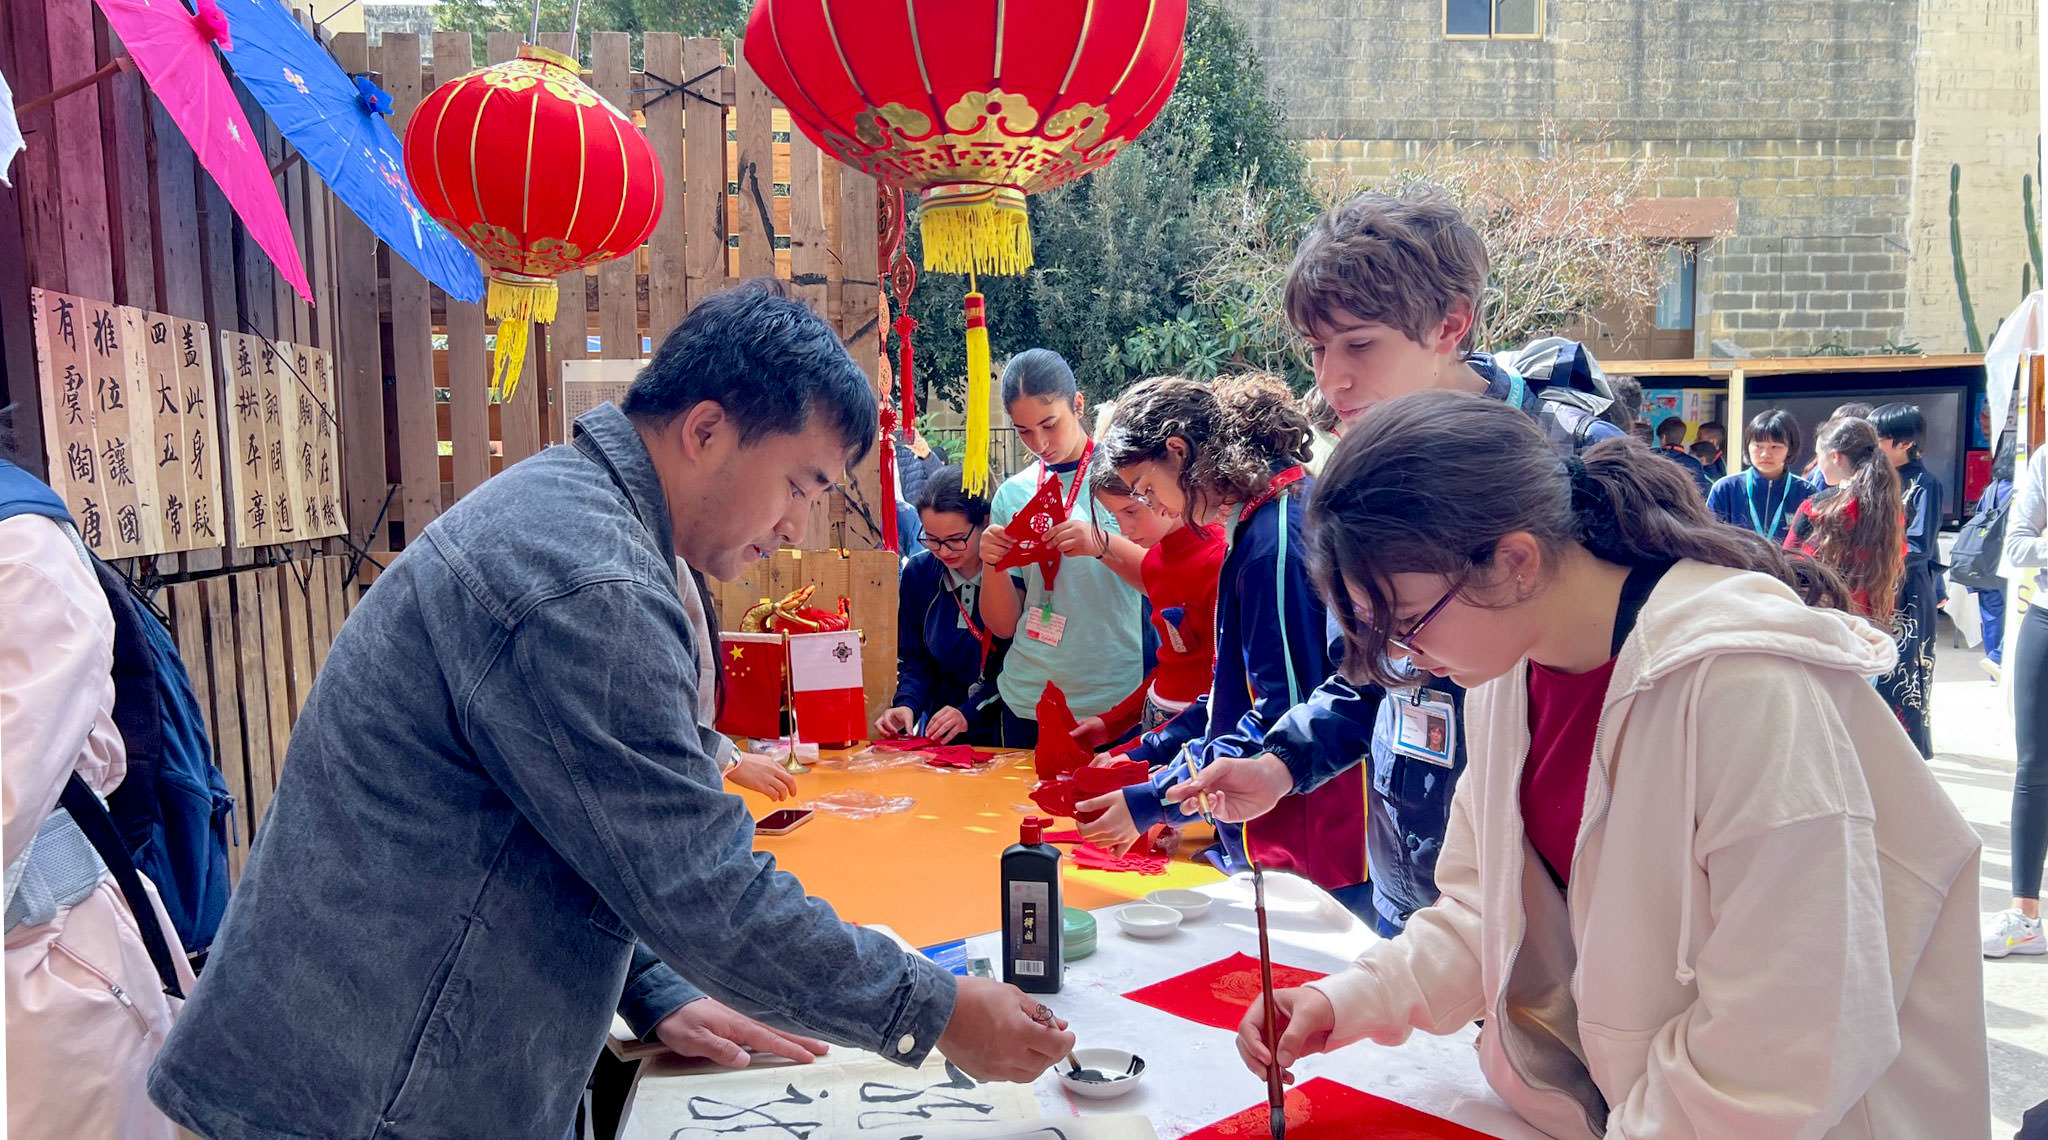 Chinese Culture In Malta